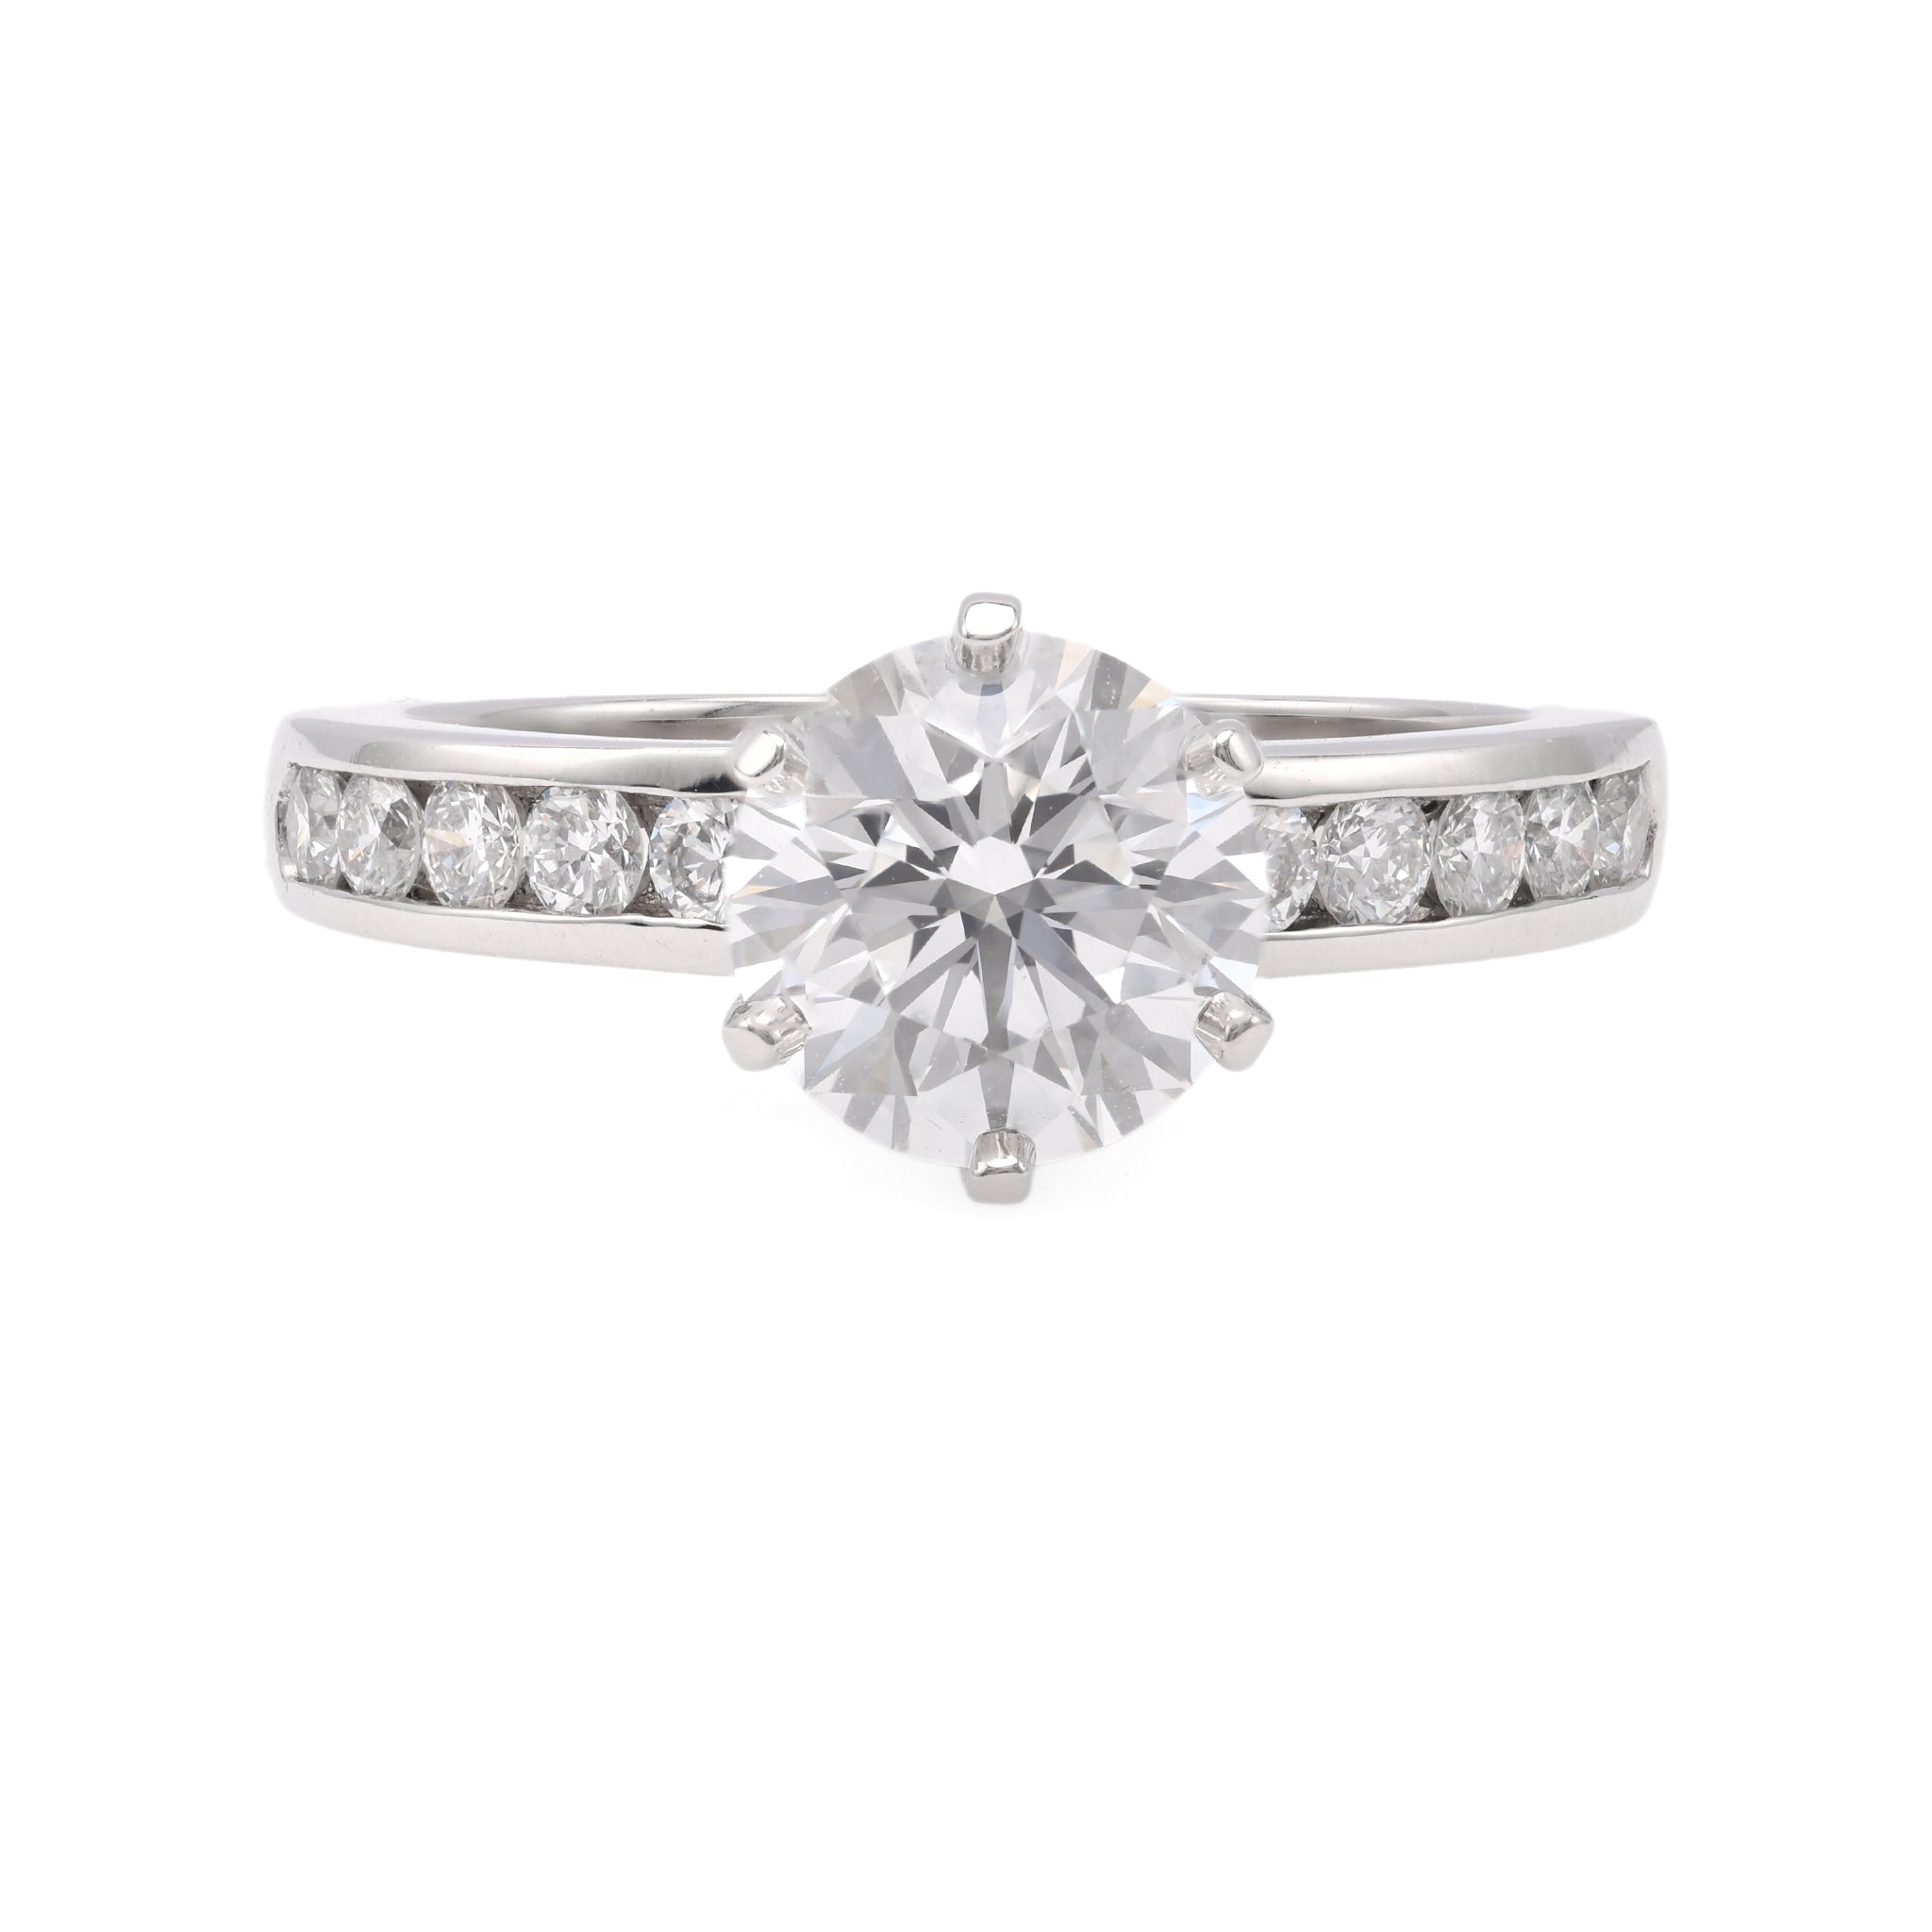 Tiffany & Co. 1.59 Carat Round Brilliant Cut Diamond Platinum Ring Rings Jack Weir & Sons   